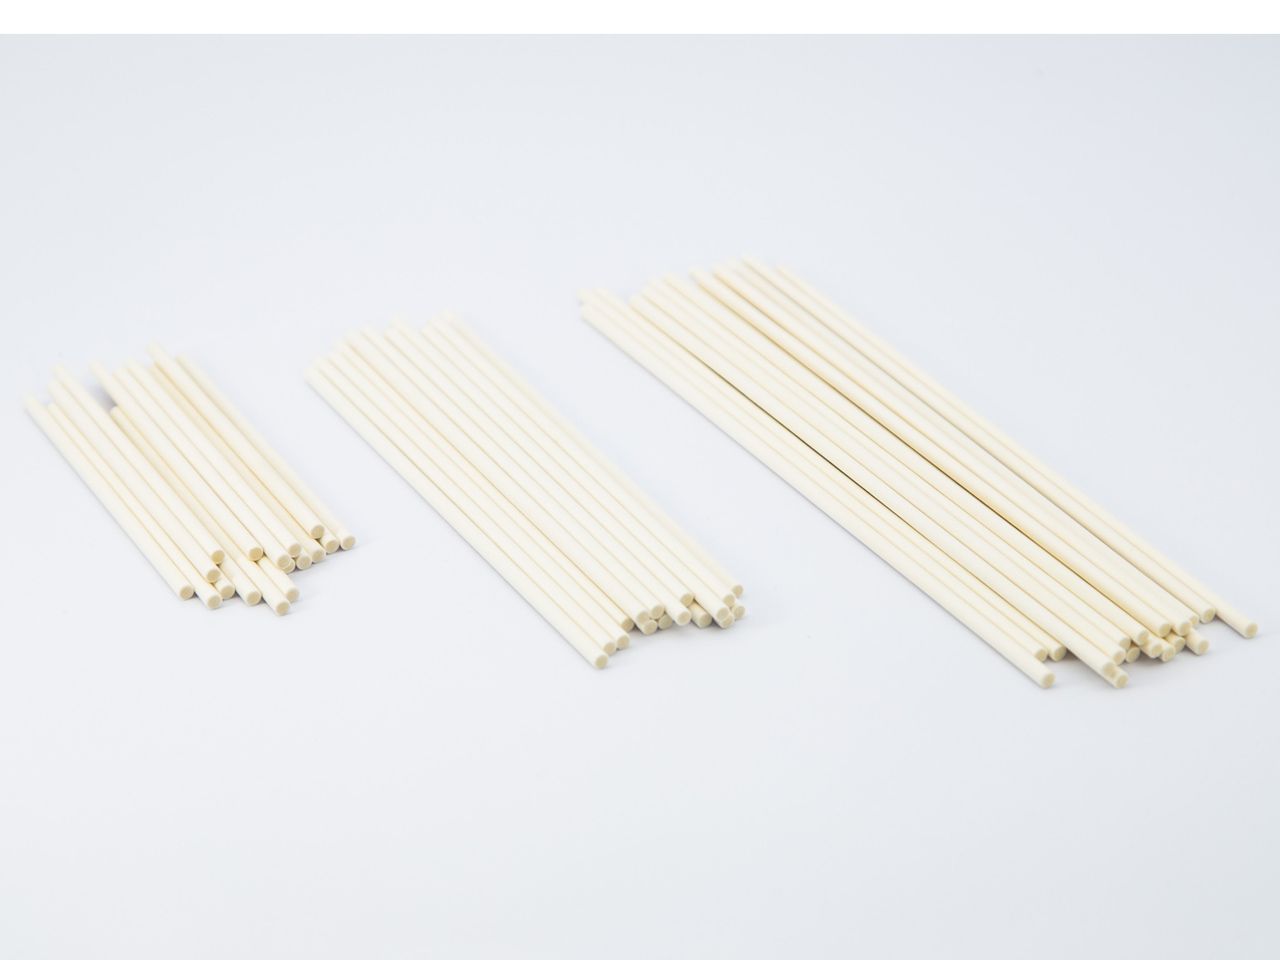 dekofee: Cake Pop Sticks, Kraftpapier, Weiß, 100 Stück á 15 cm x 4 mm